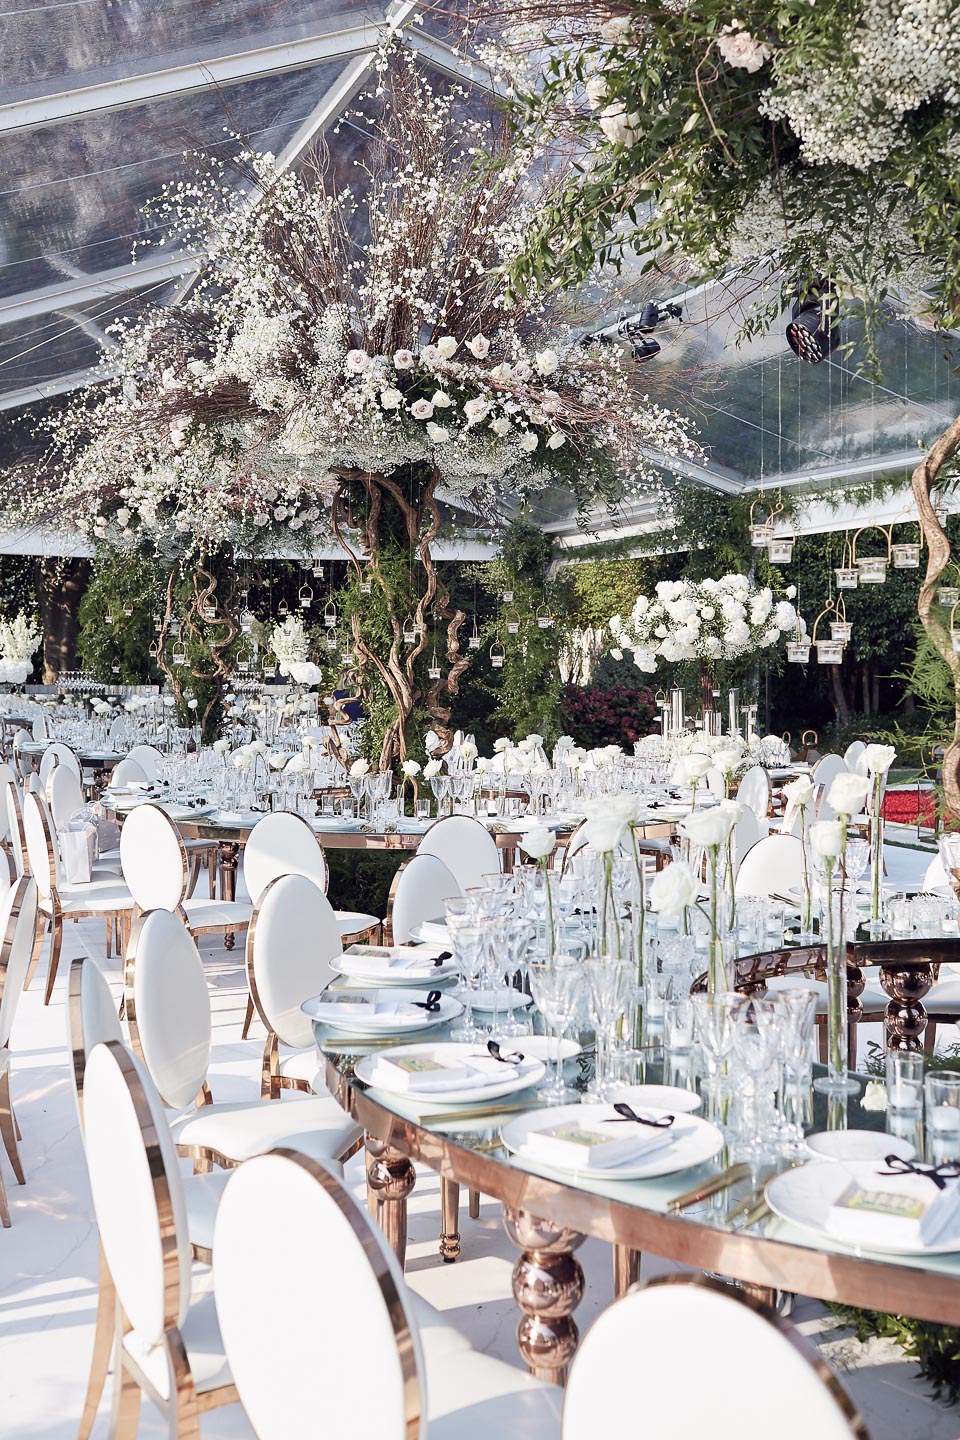 villa balbiano luxurious lake como wedding venue best wedding decor reception